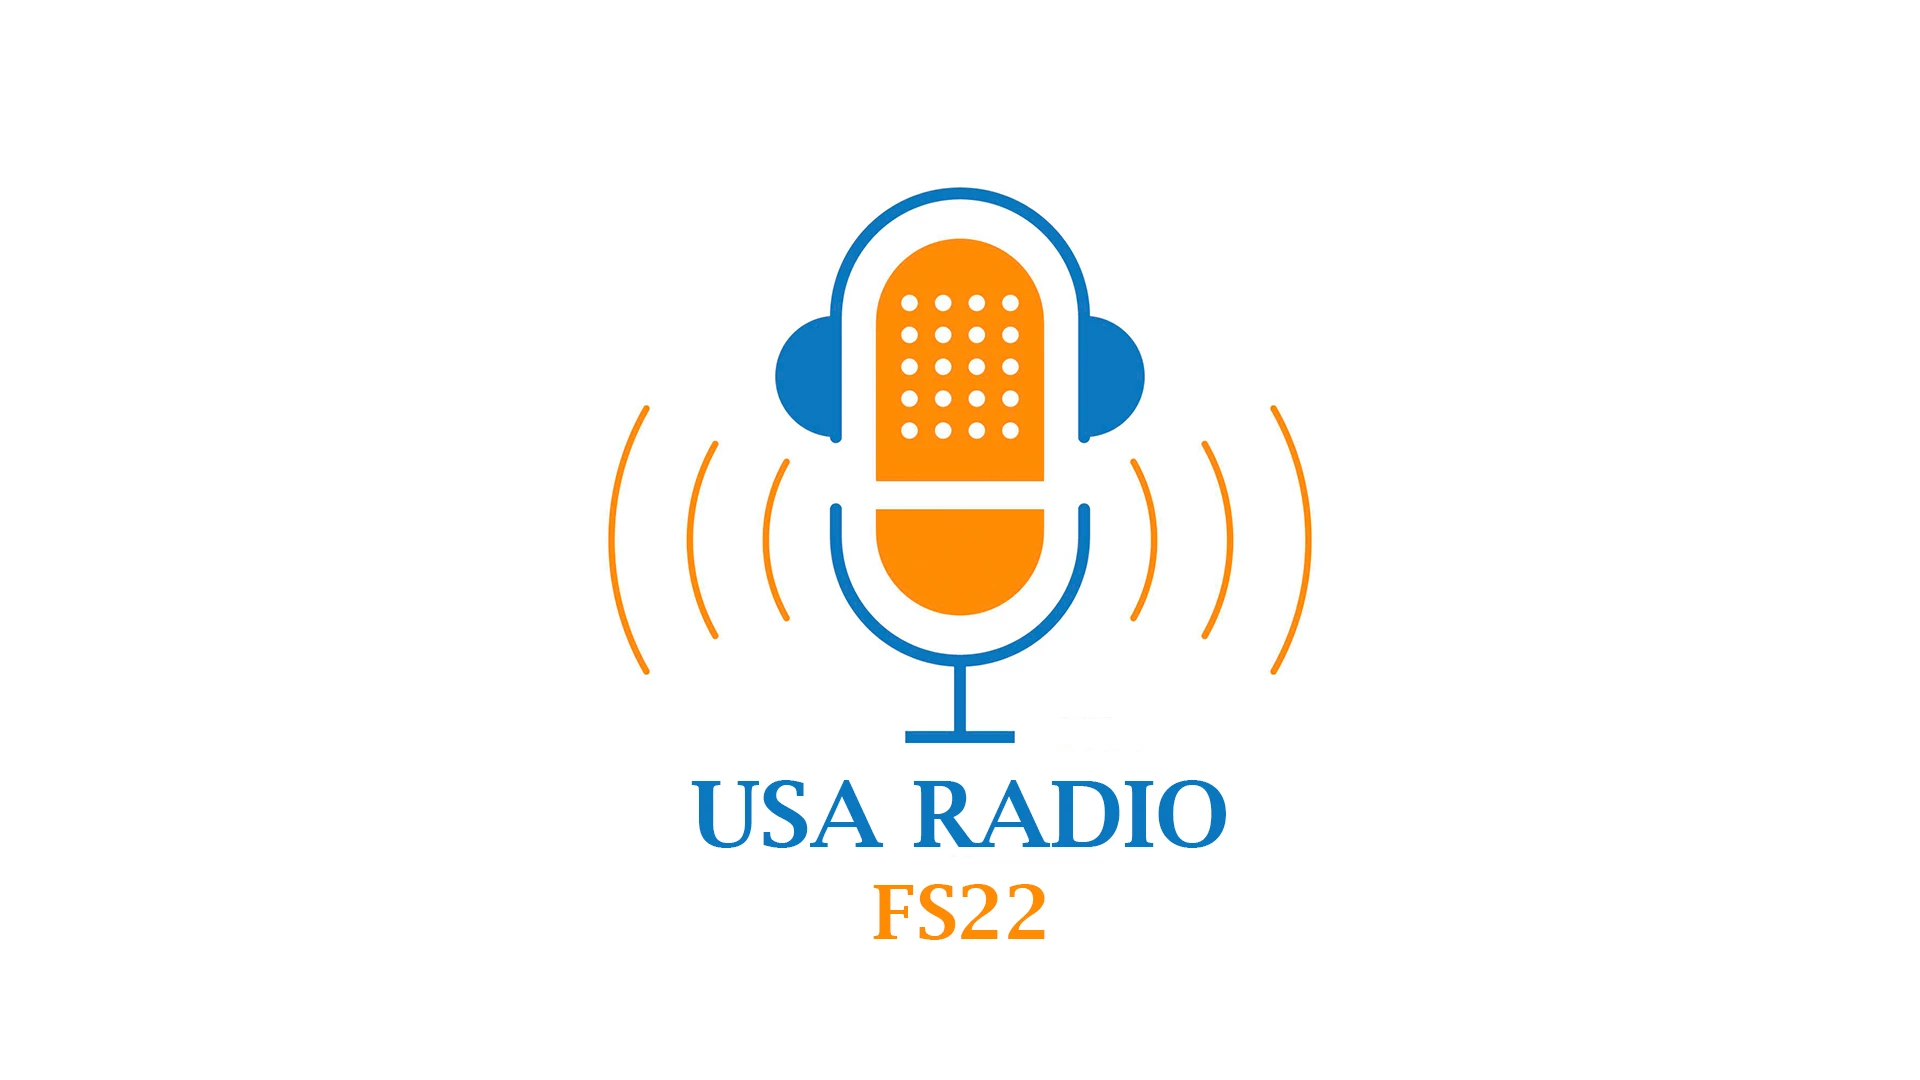 FS22 USA RADIO .0 